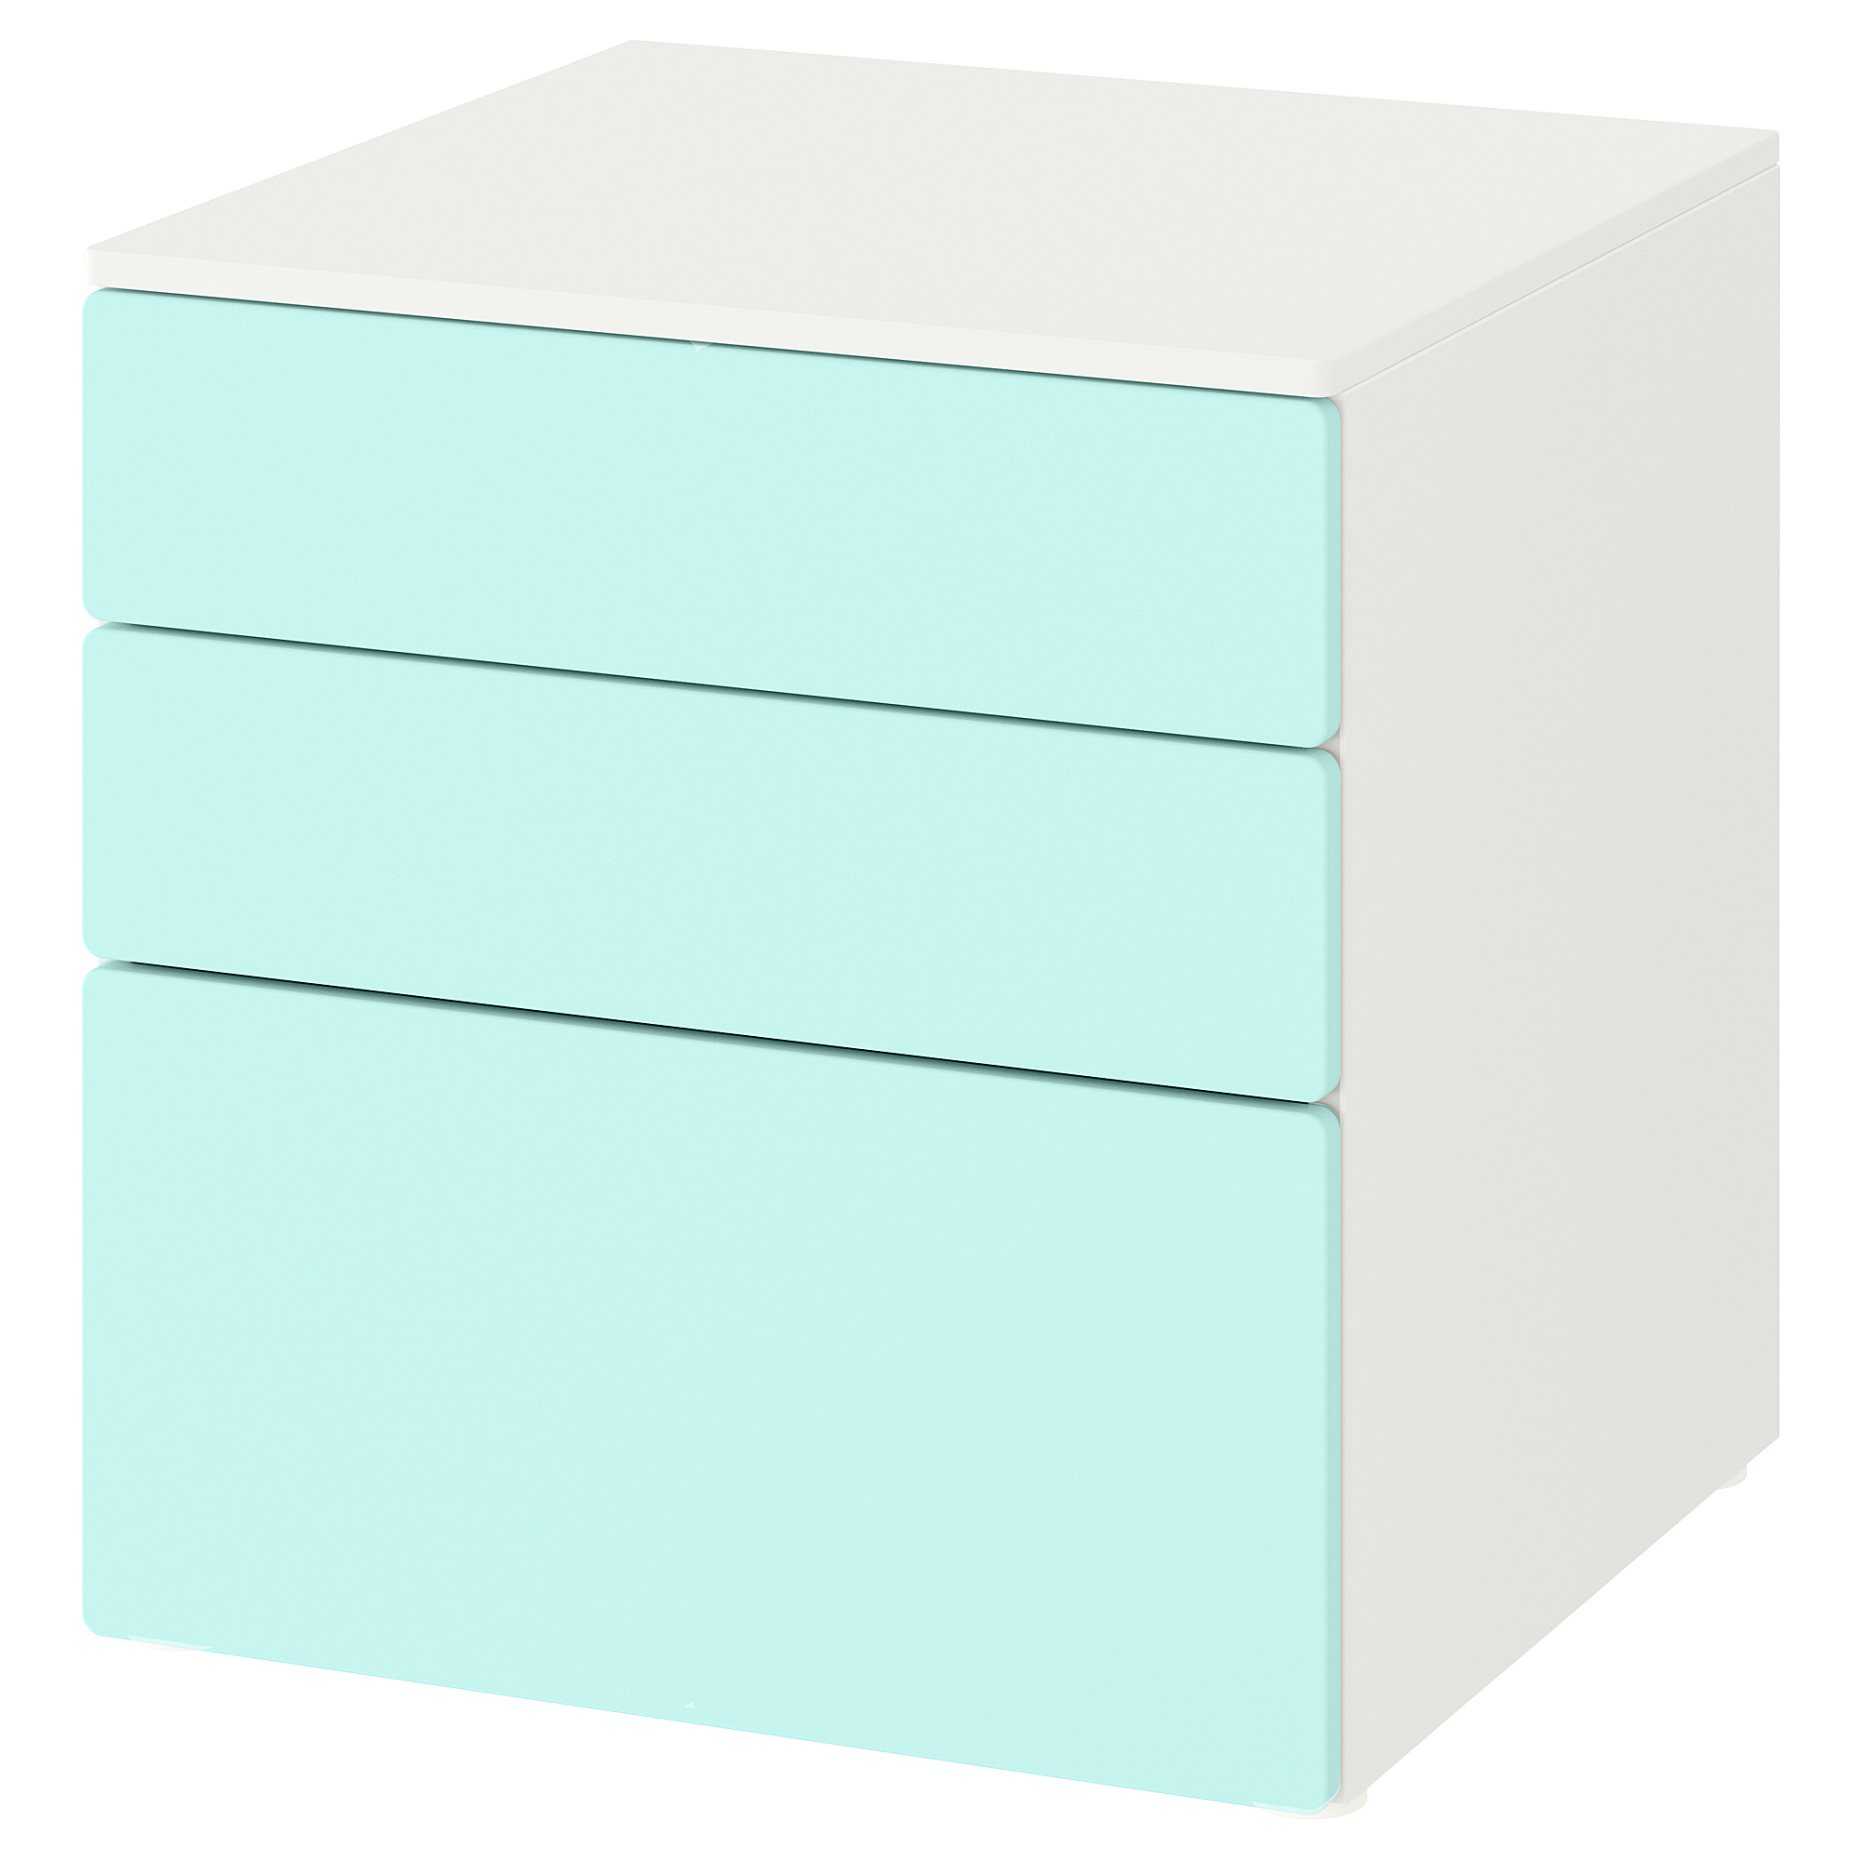 SMASTAD/PLATSA, chest of 3 drawers, 60x57x63 cm, 993.875.59